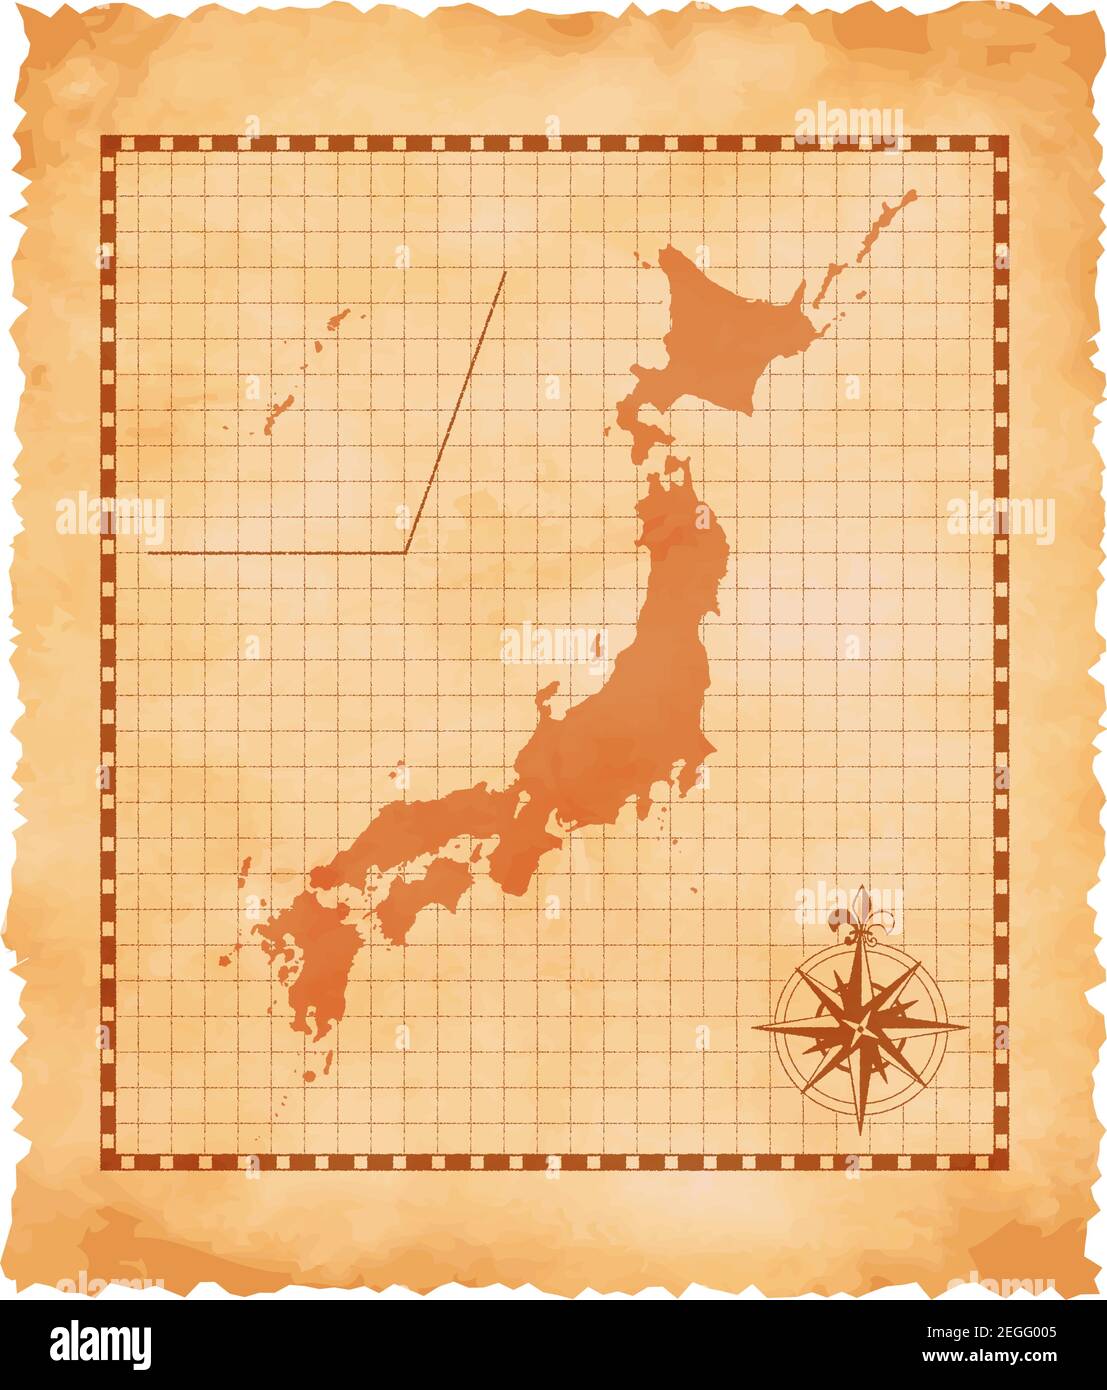 Old vintage Japan map vector illustration Stock Vector